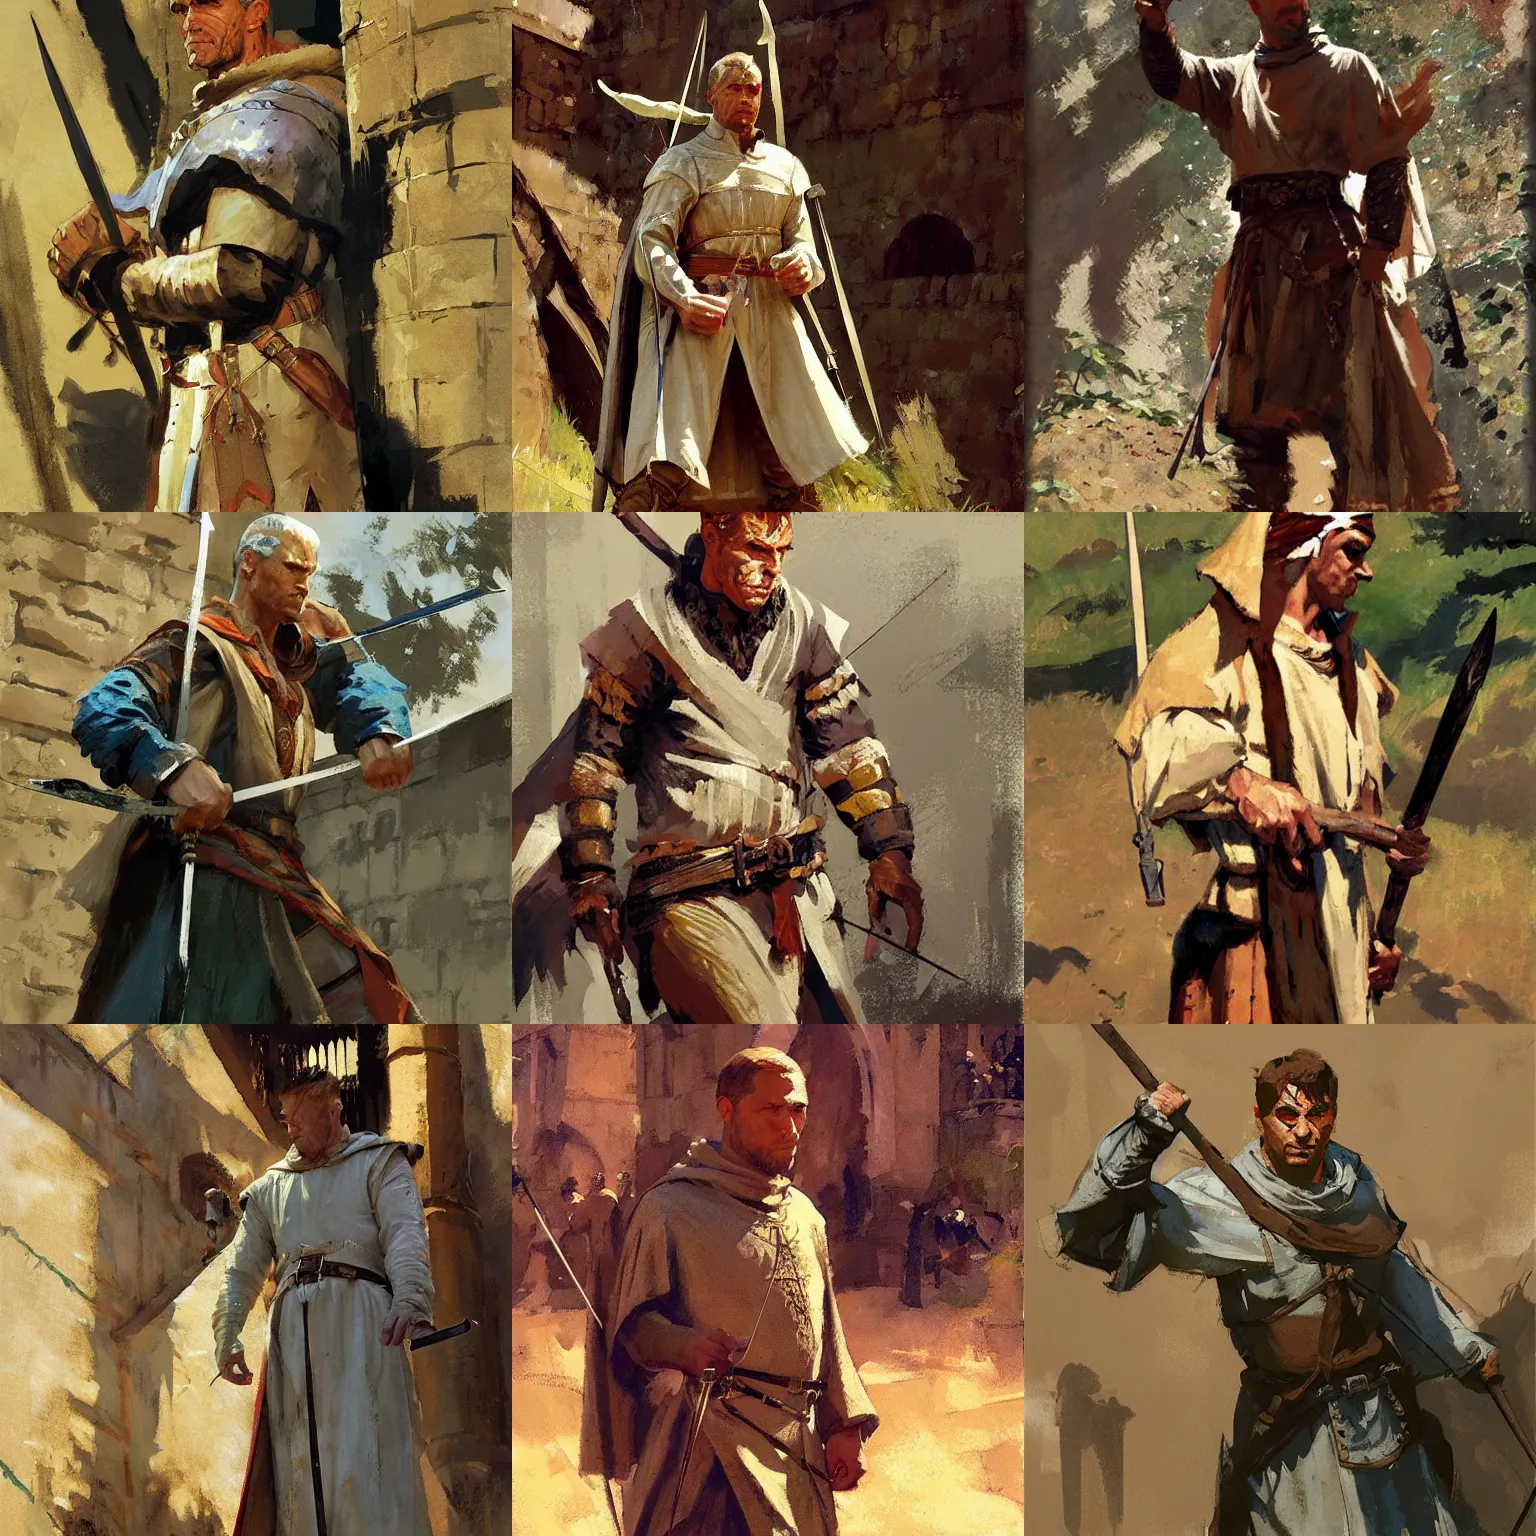 Prompt: archer in medieval clothes by craig mullins, greg manchess, bernie fuchs, walter everett, epic